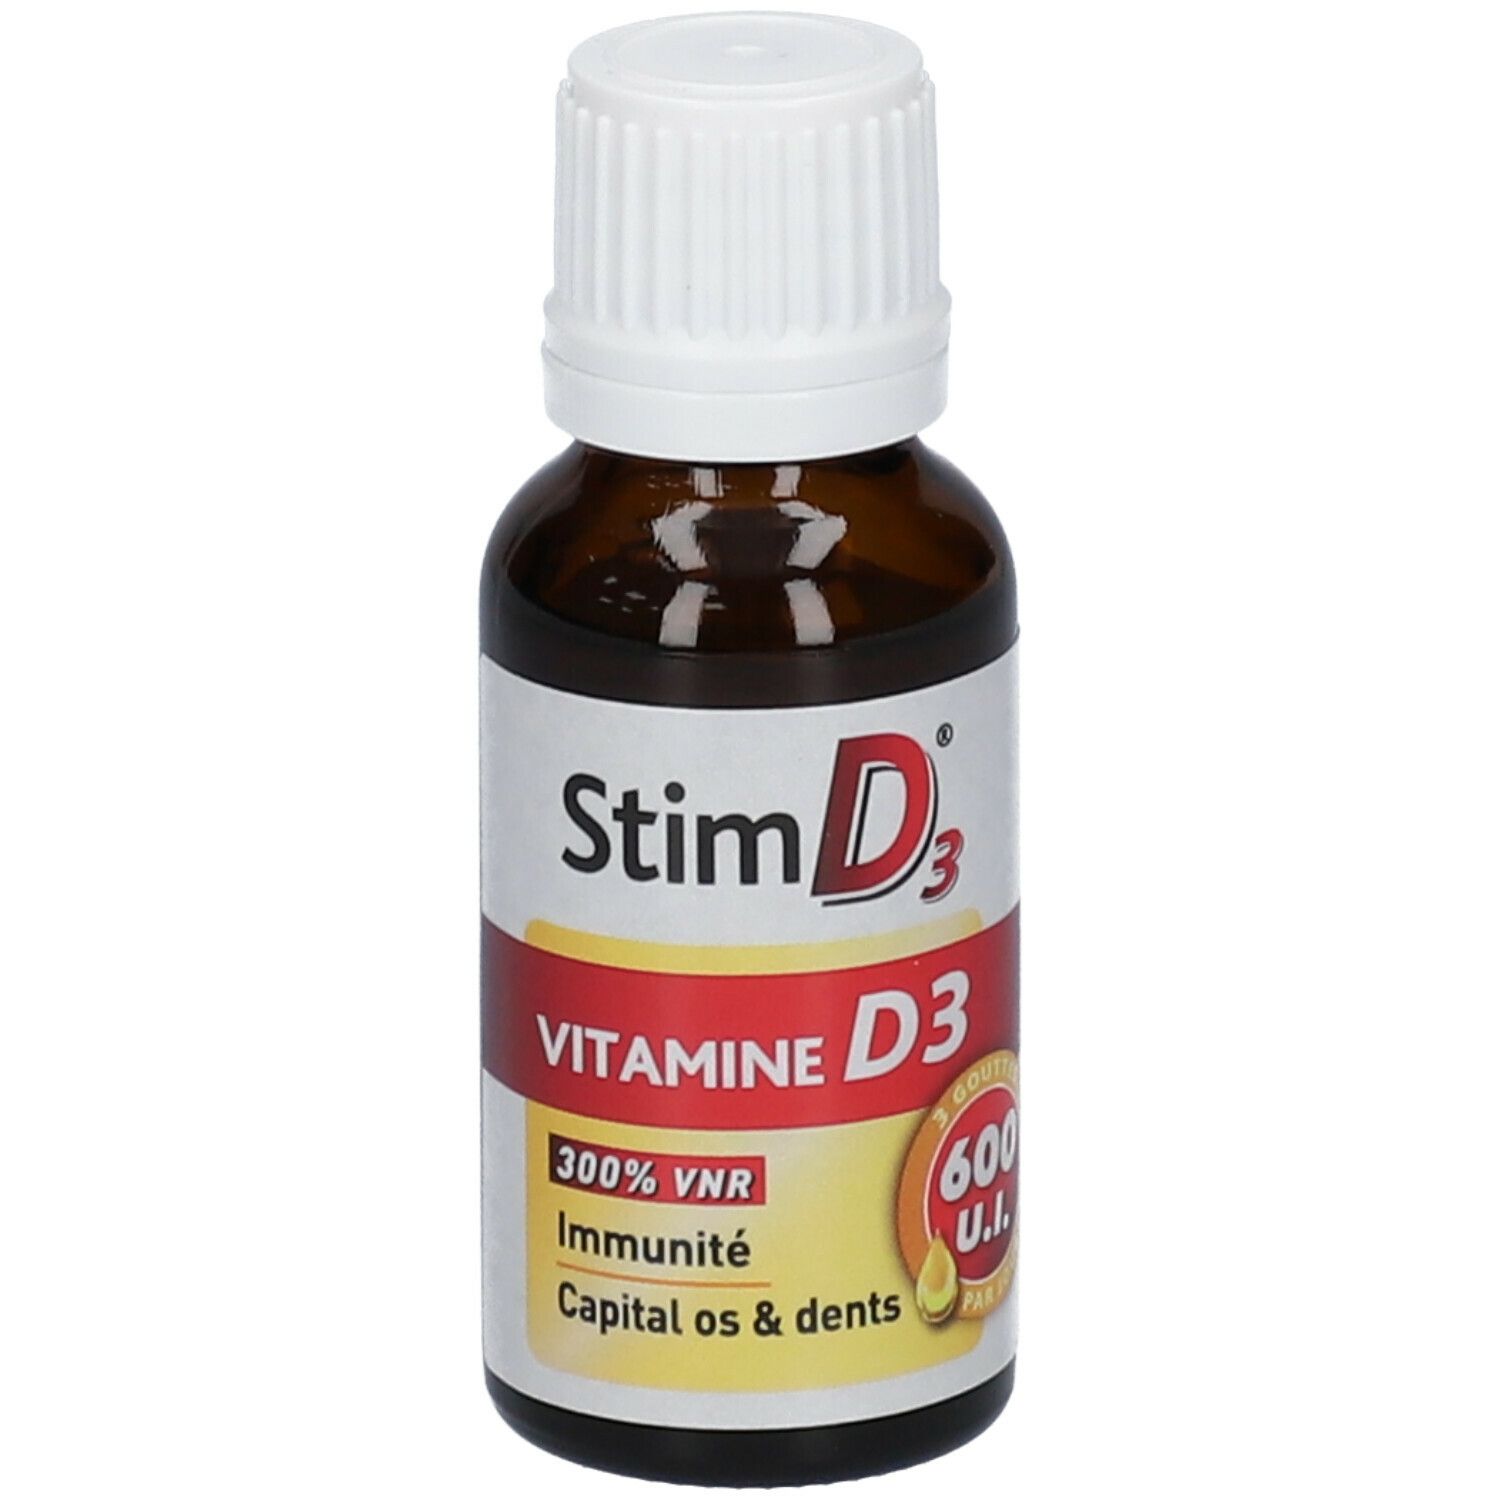 Stim D3® Vitamine D3